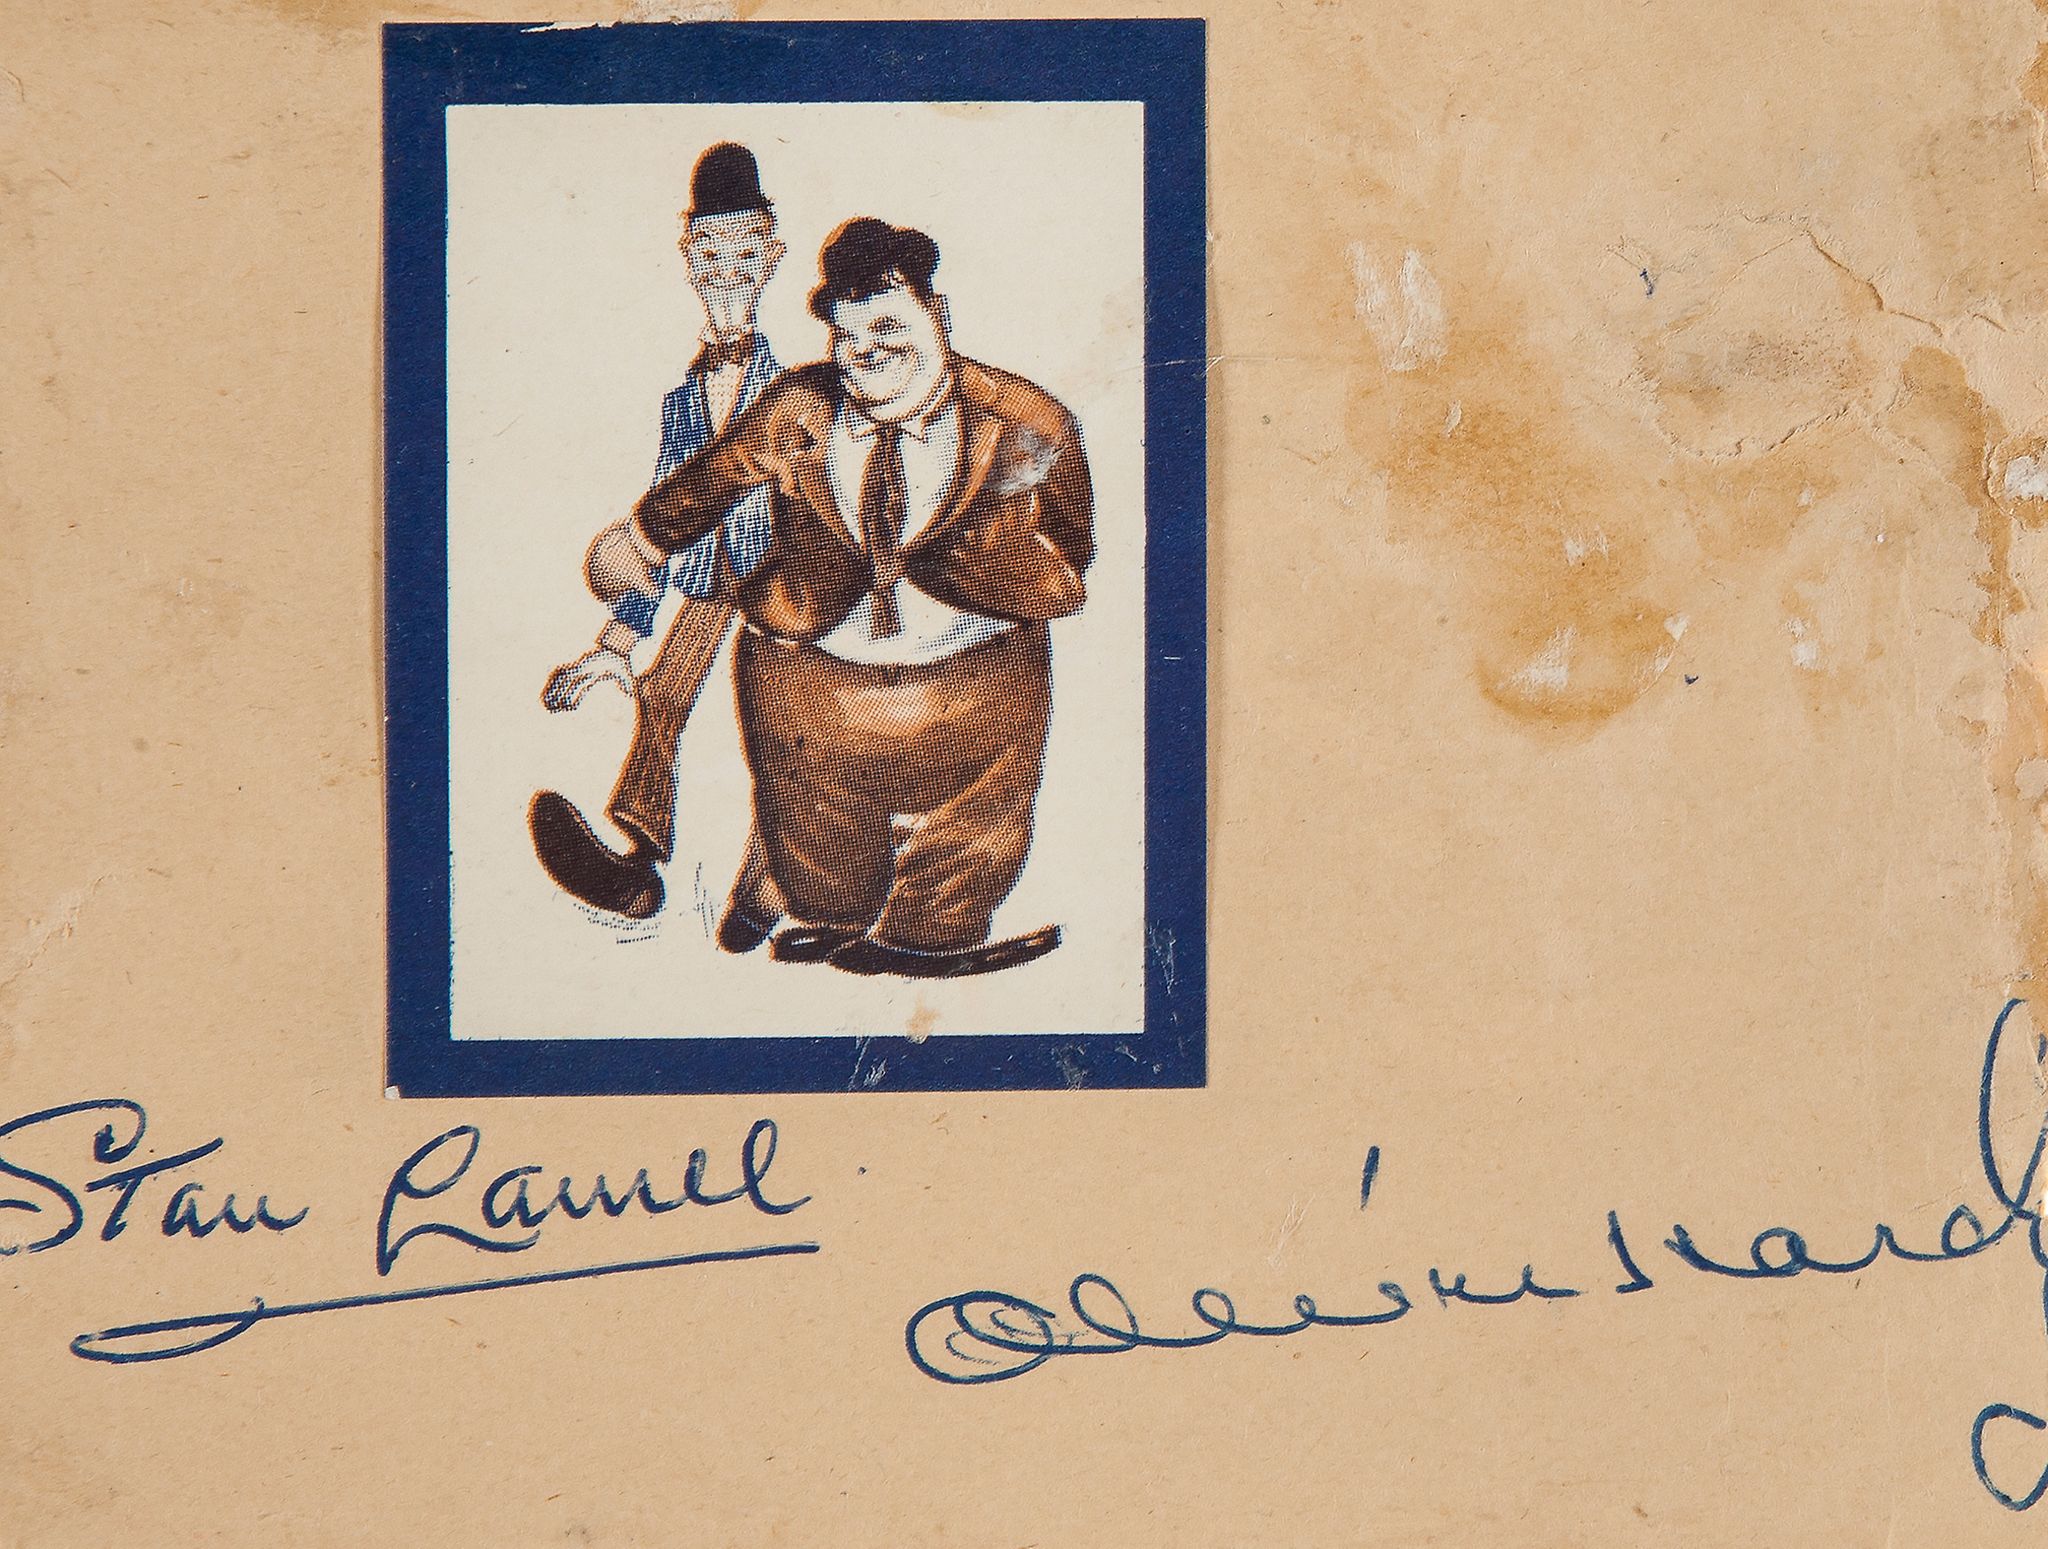 AUTOGRAPH ALBUM - INCL. LAUREL AND HARDY - Autograph album containing the signatures of various